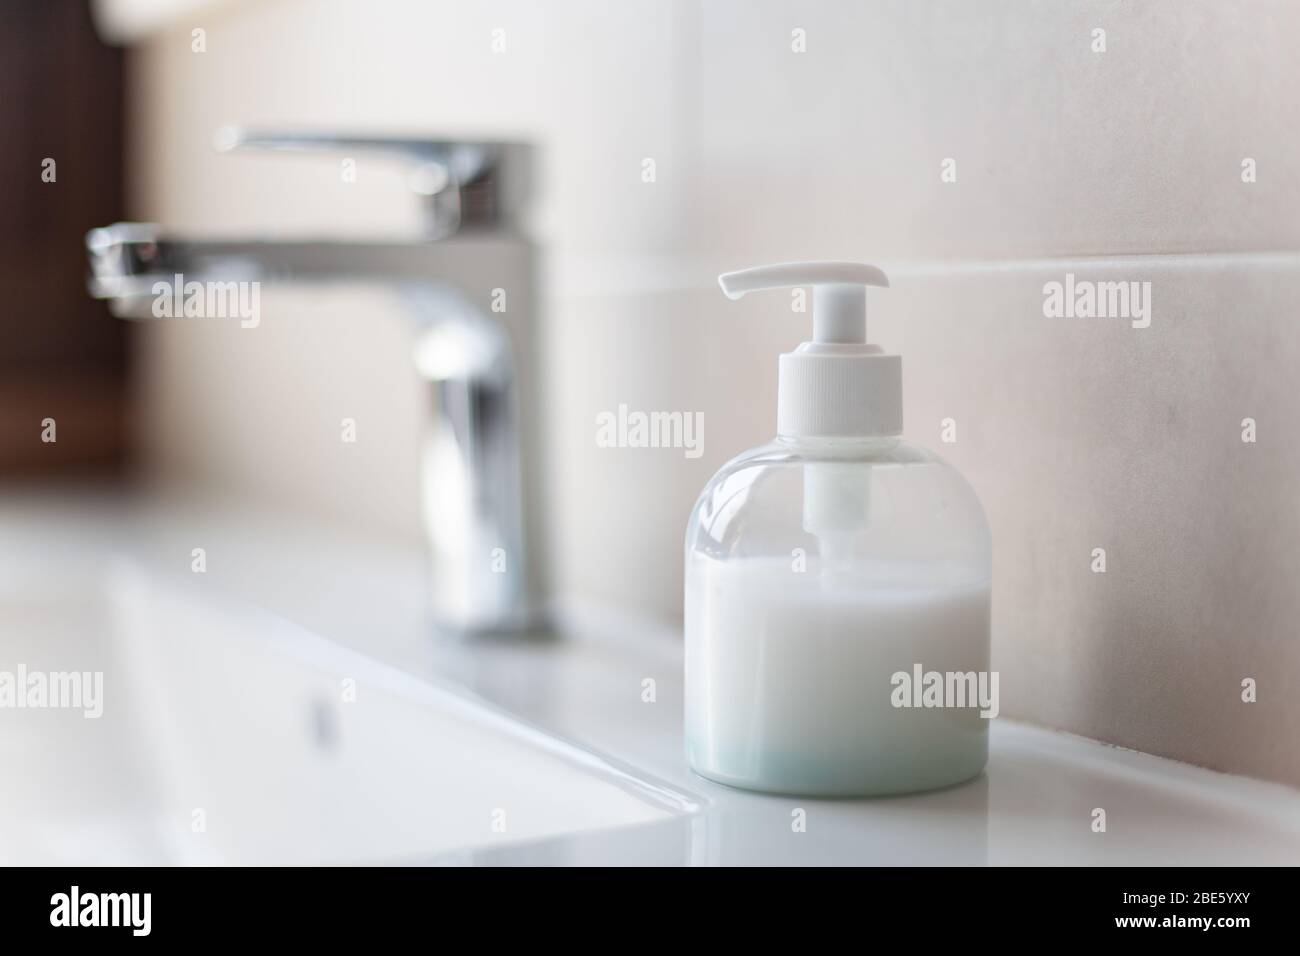 Sink soap dispenser to prevent coronavirus infection Stock Photo